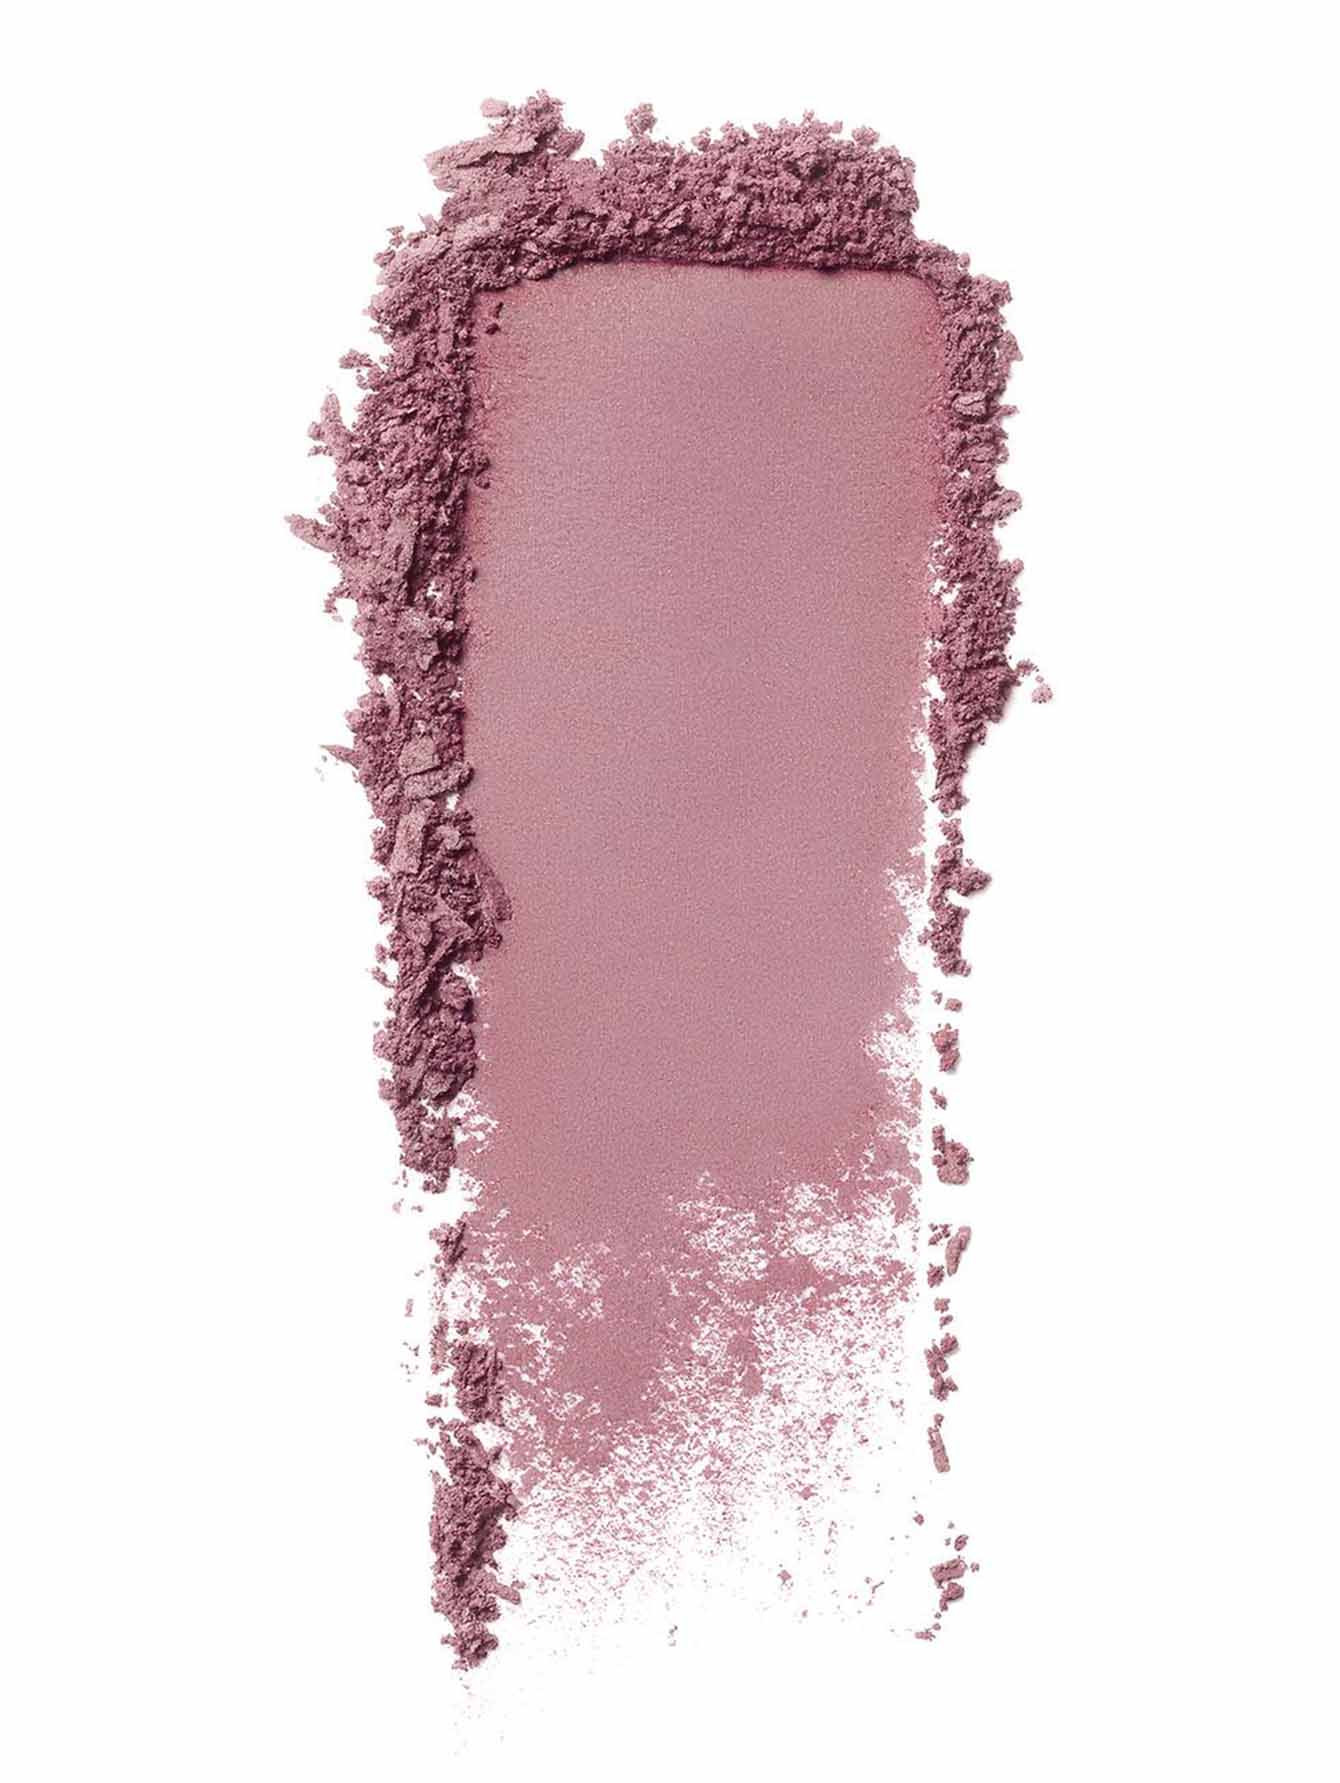 Румяна - Sand pink, Cheeks - Обтравка1